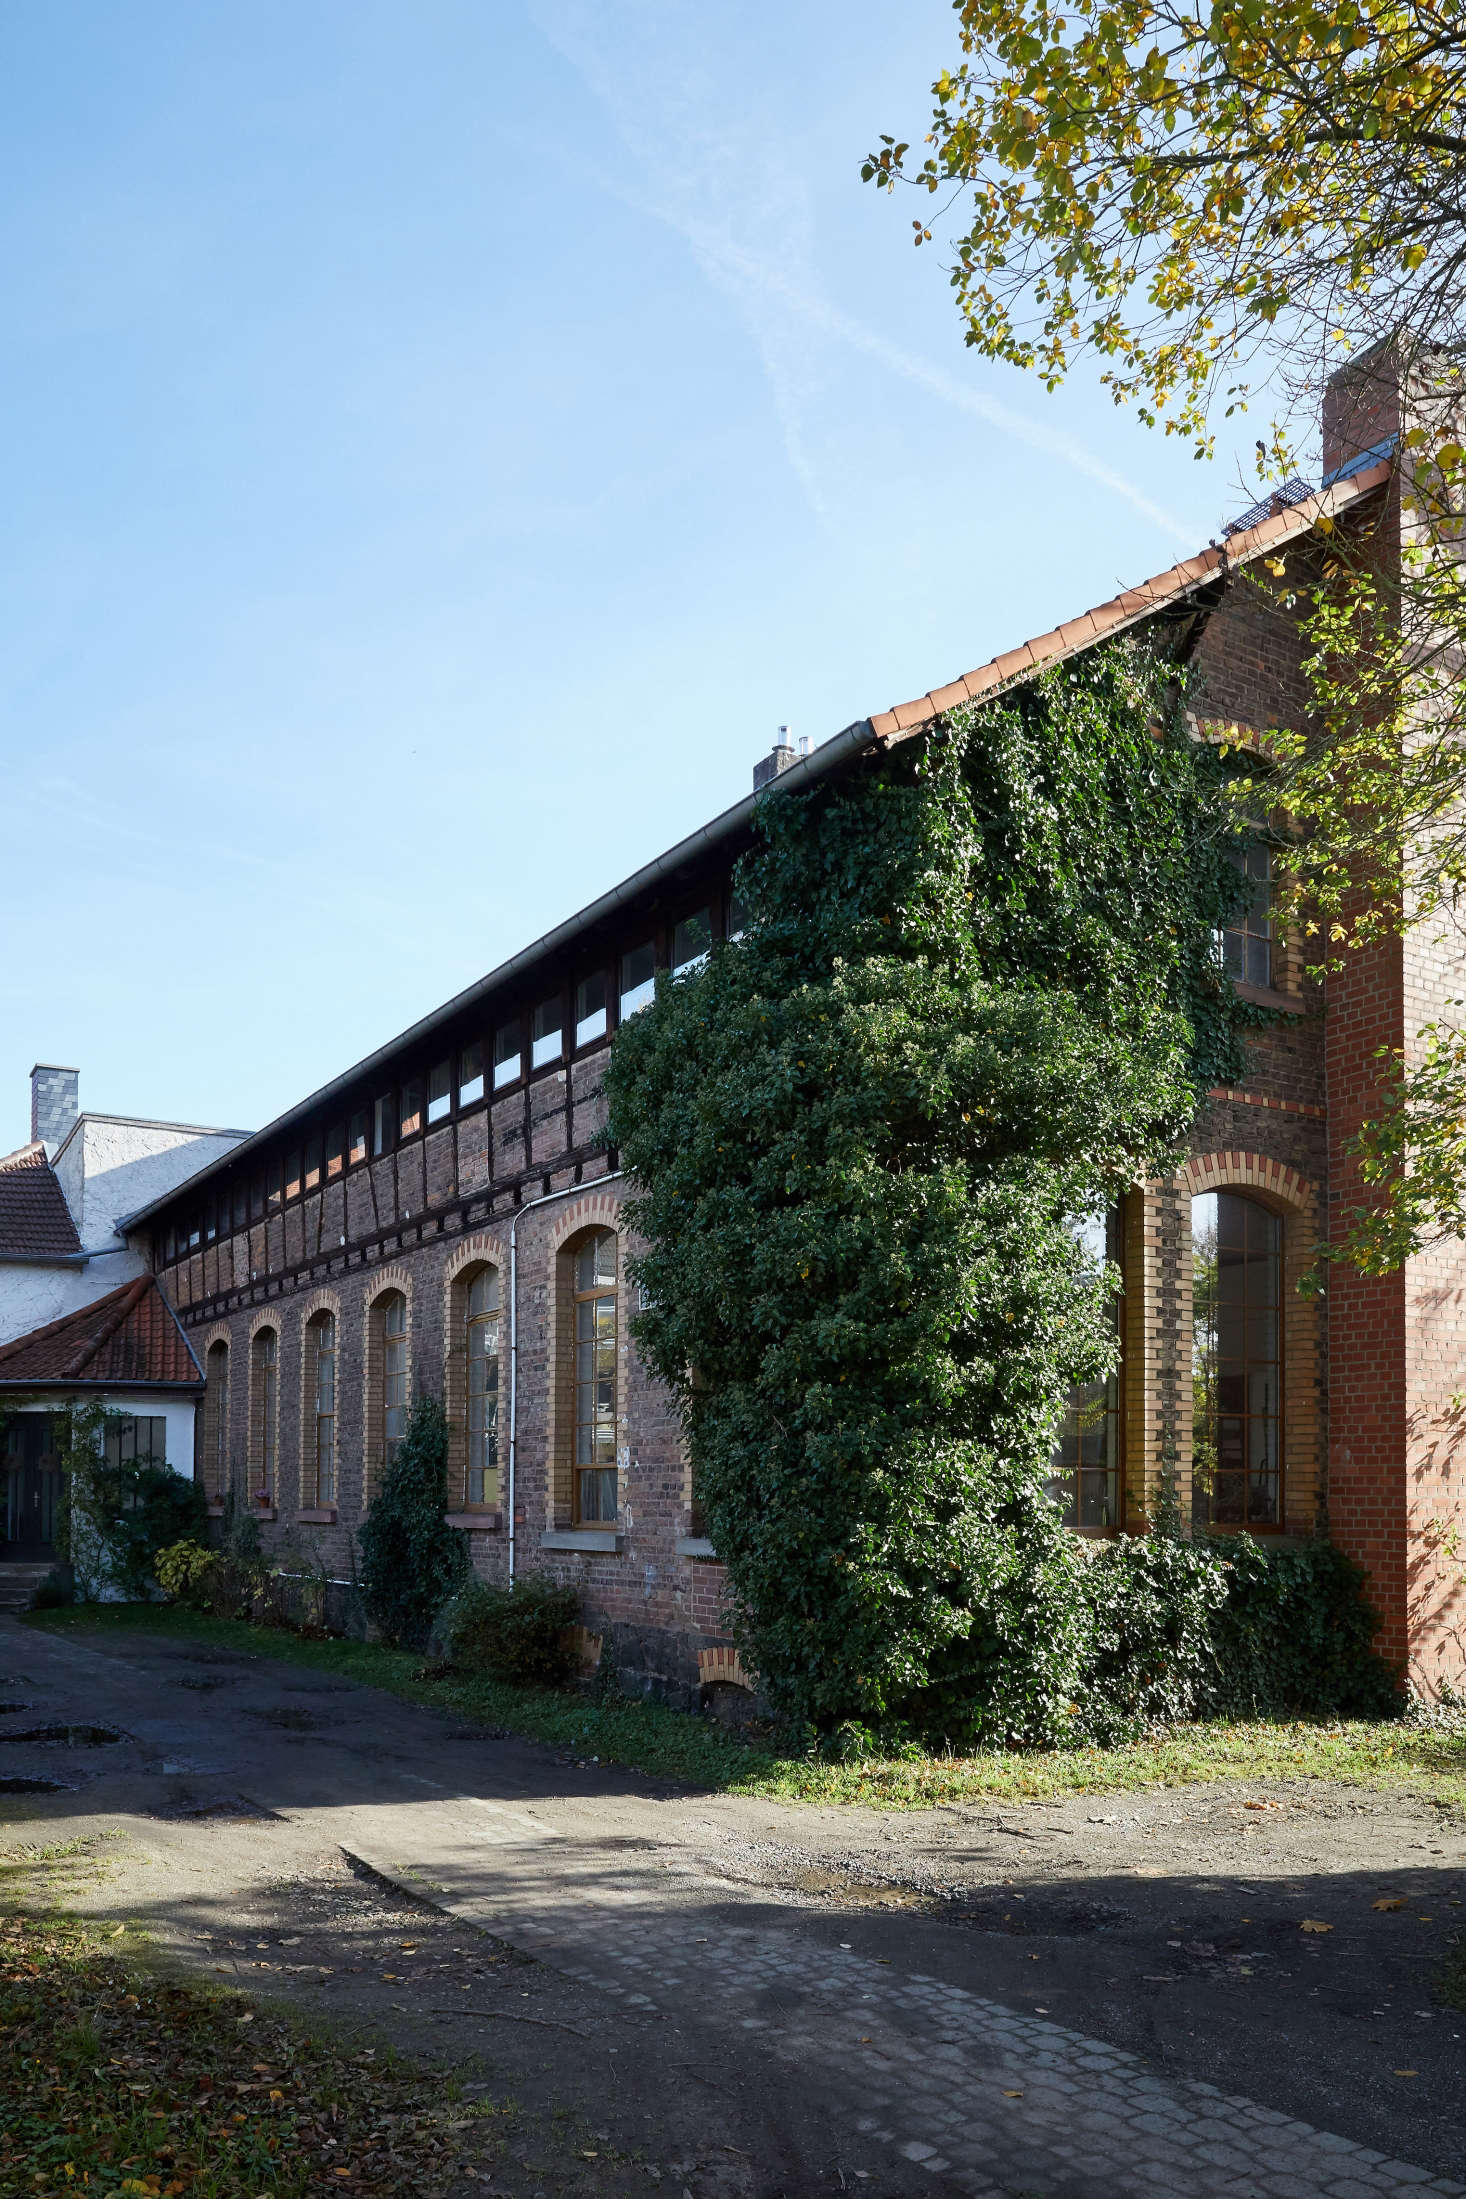 lappalainen studio in a converted old brick warehouse in hanau, germany. marc k 19